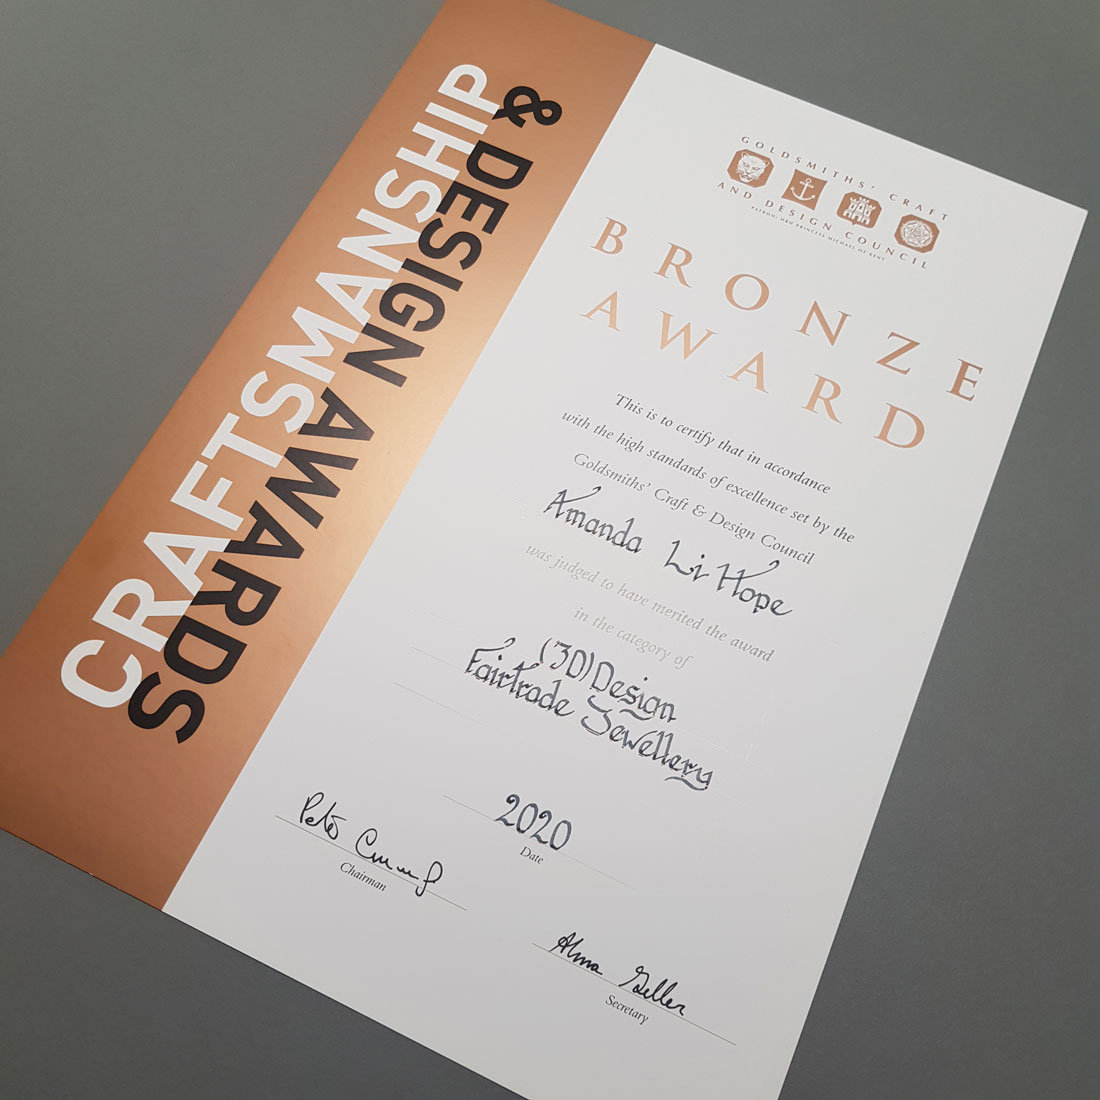 Certificate for Amanda's bronze award for the Craftsmanship and design awards